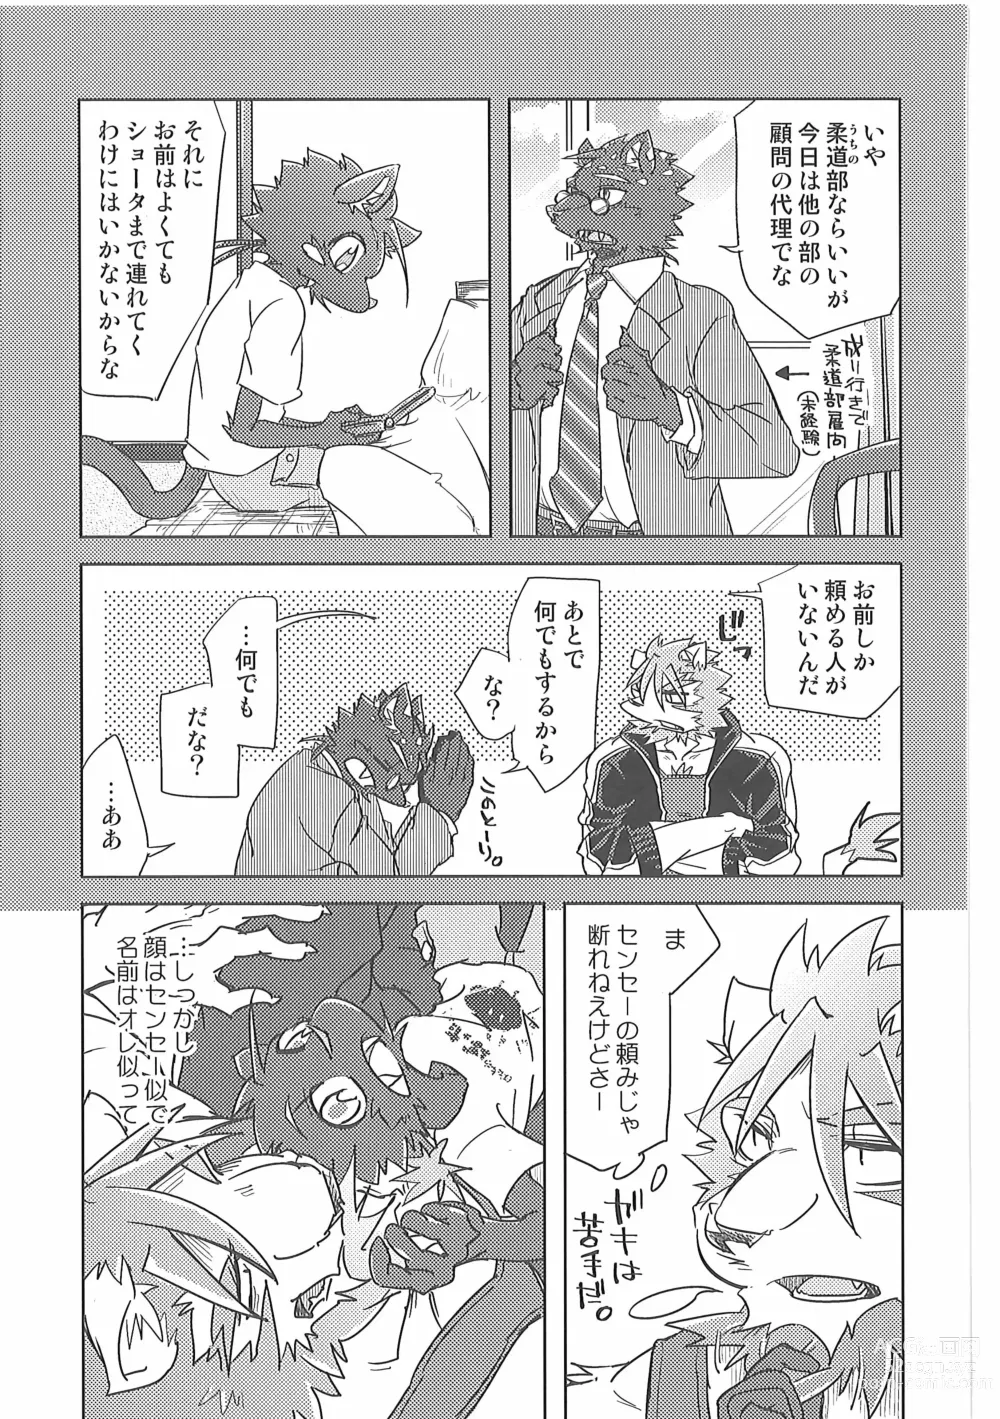 Page 6 of doujinshi Crazy Waltz